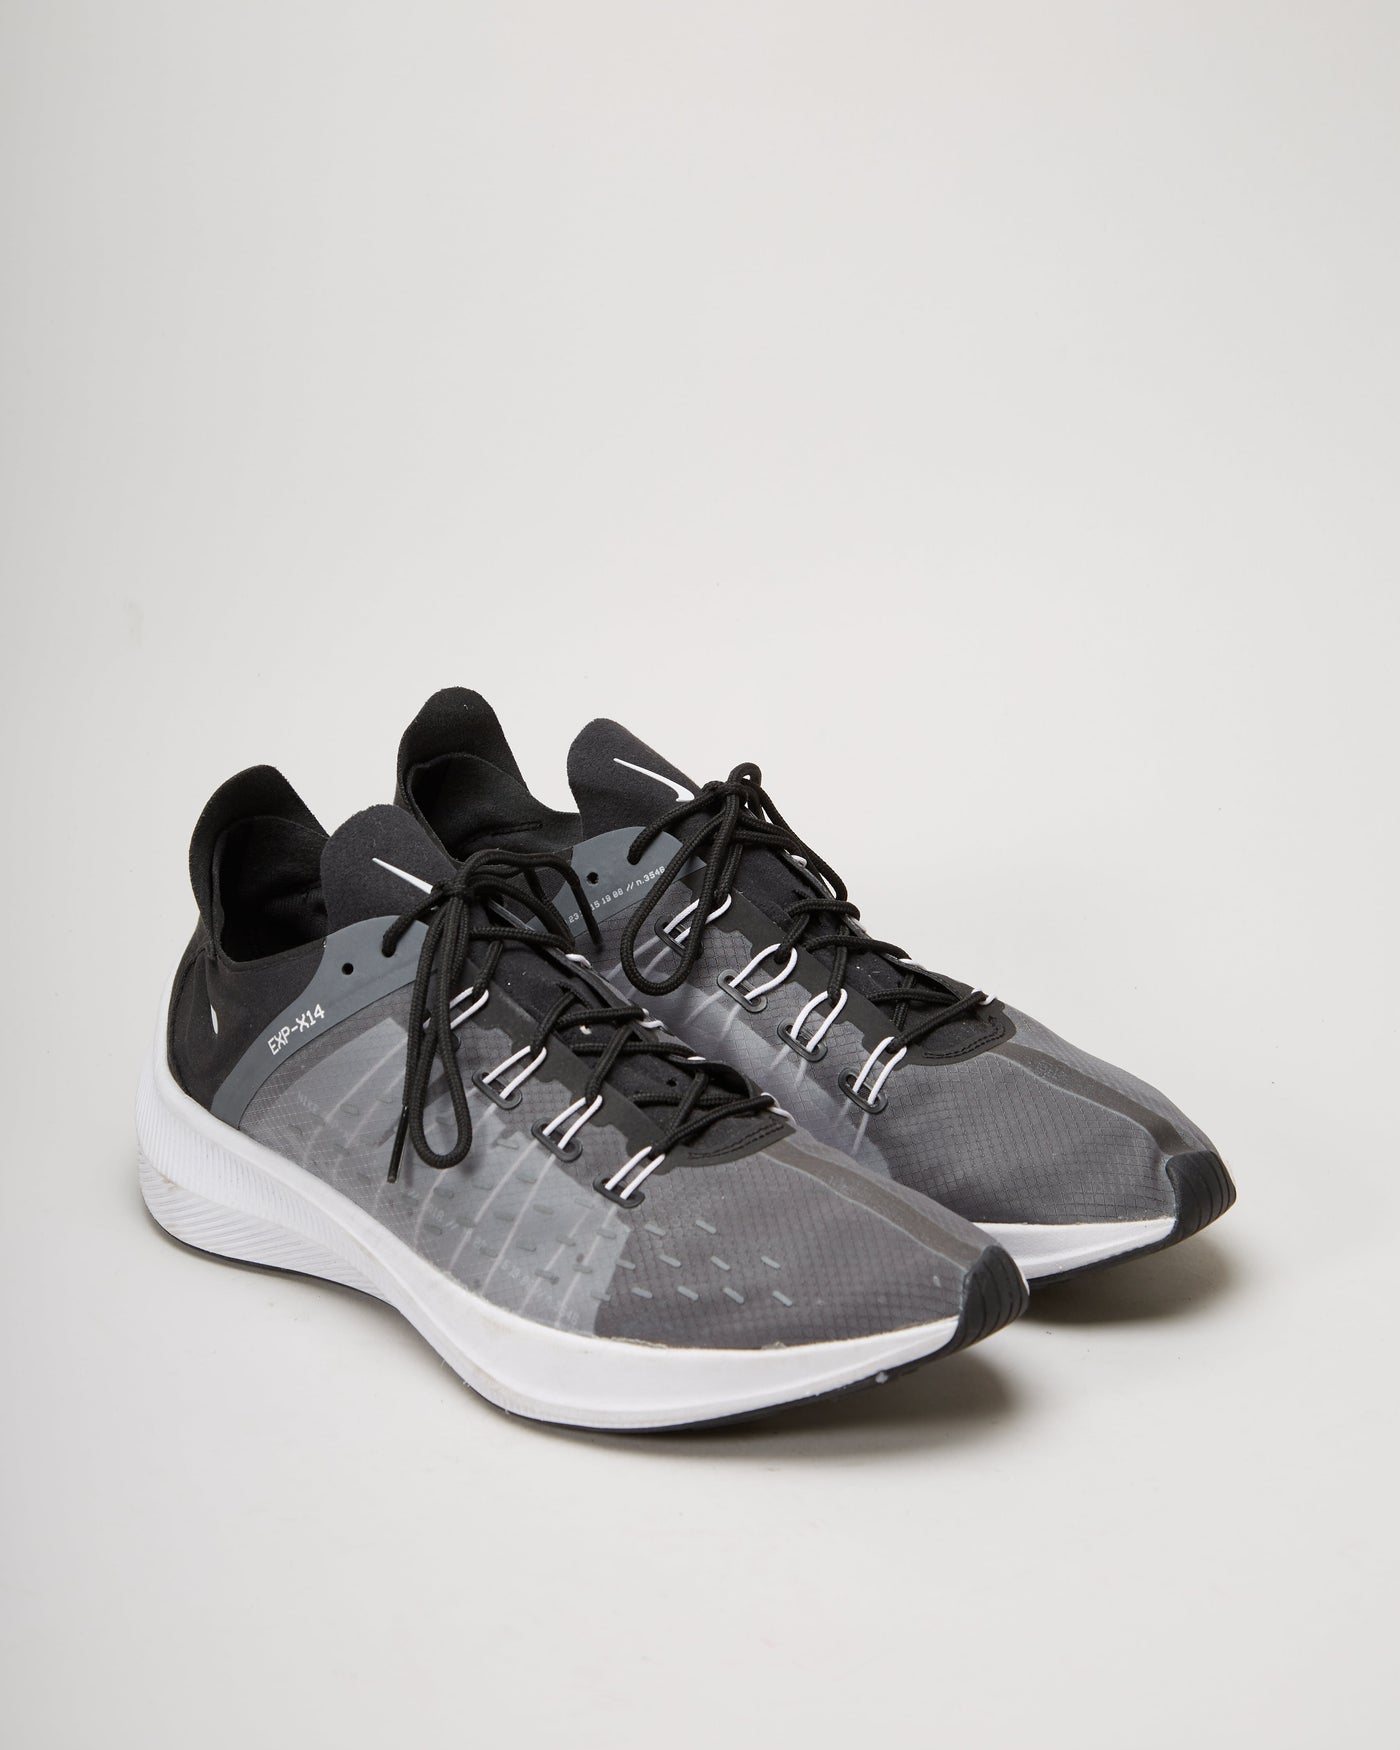 2018 Nike EXP-X14 Grey / White Colourway Shoes - UK 9